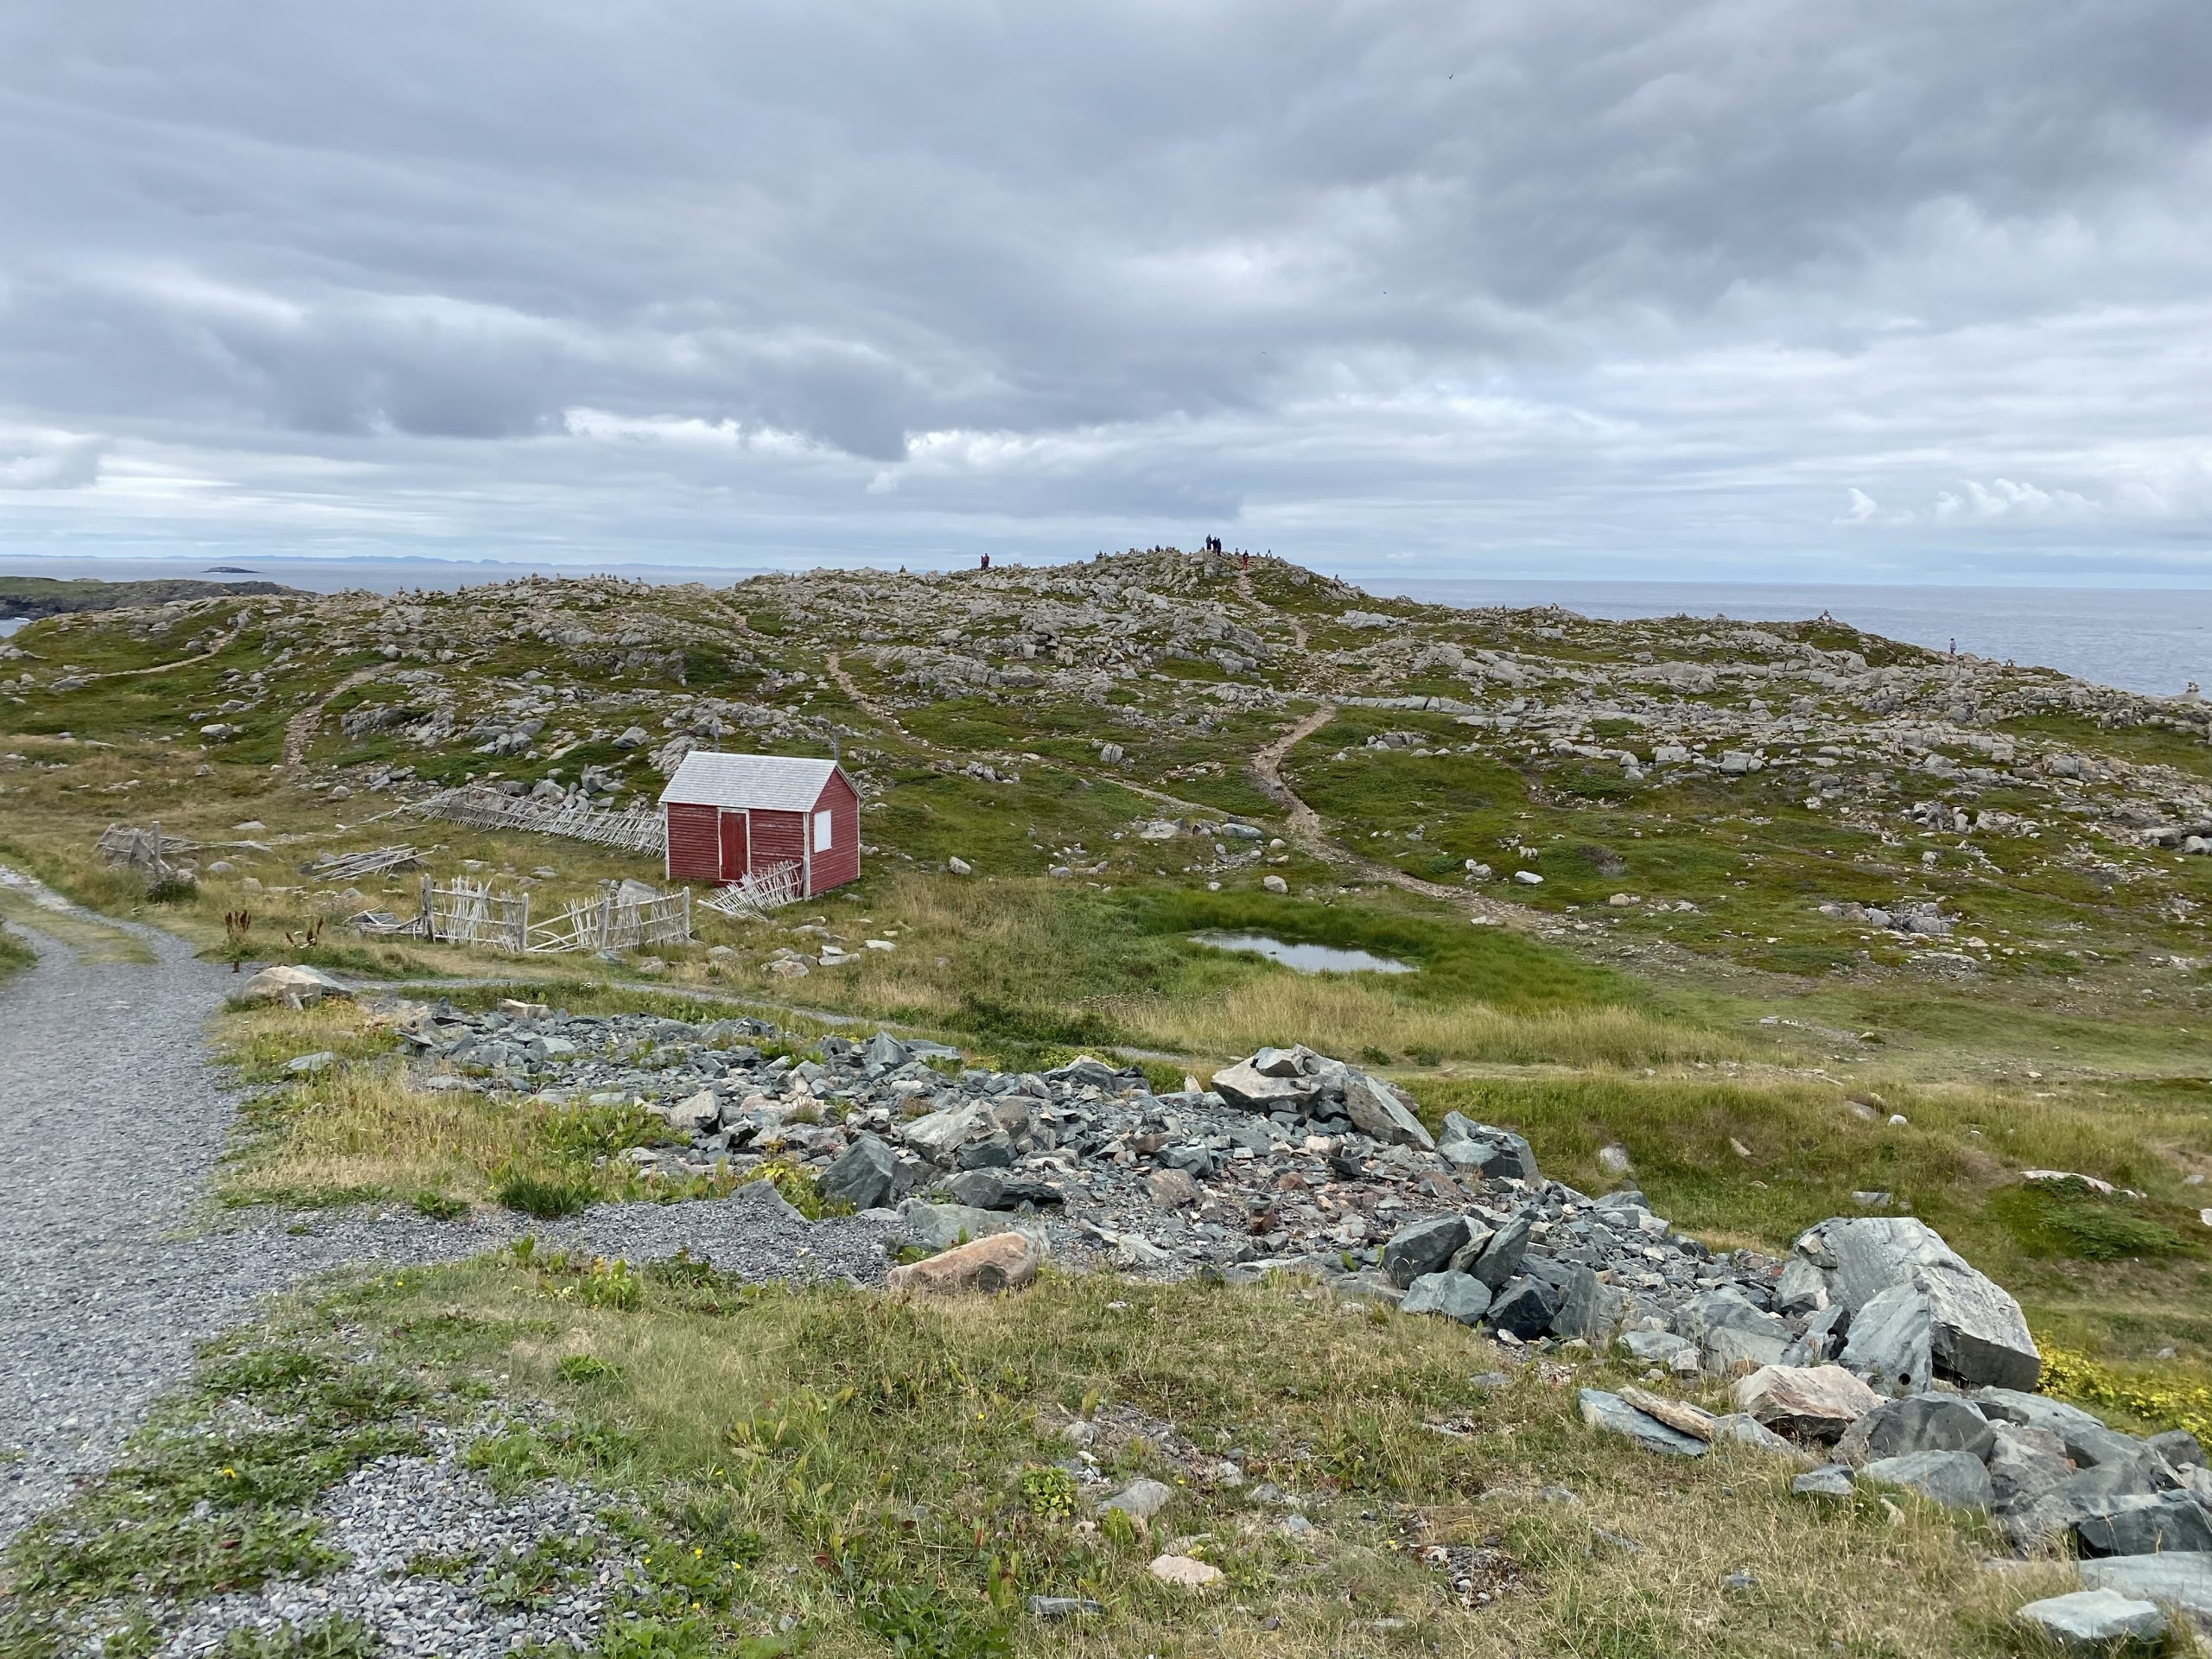 The grounds near the Bonavista lighthouse on the tip of the Bonavista Peninsula in Newfoundland.